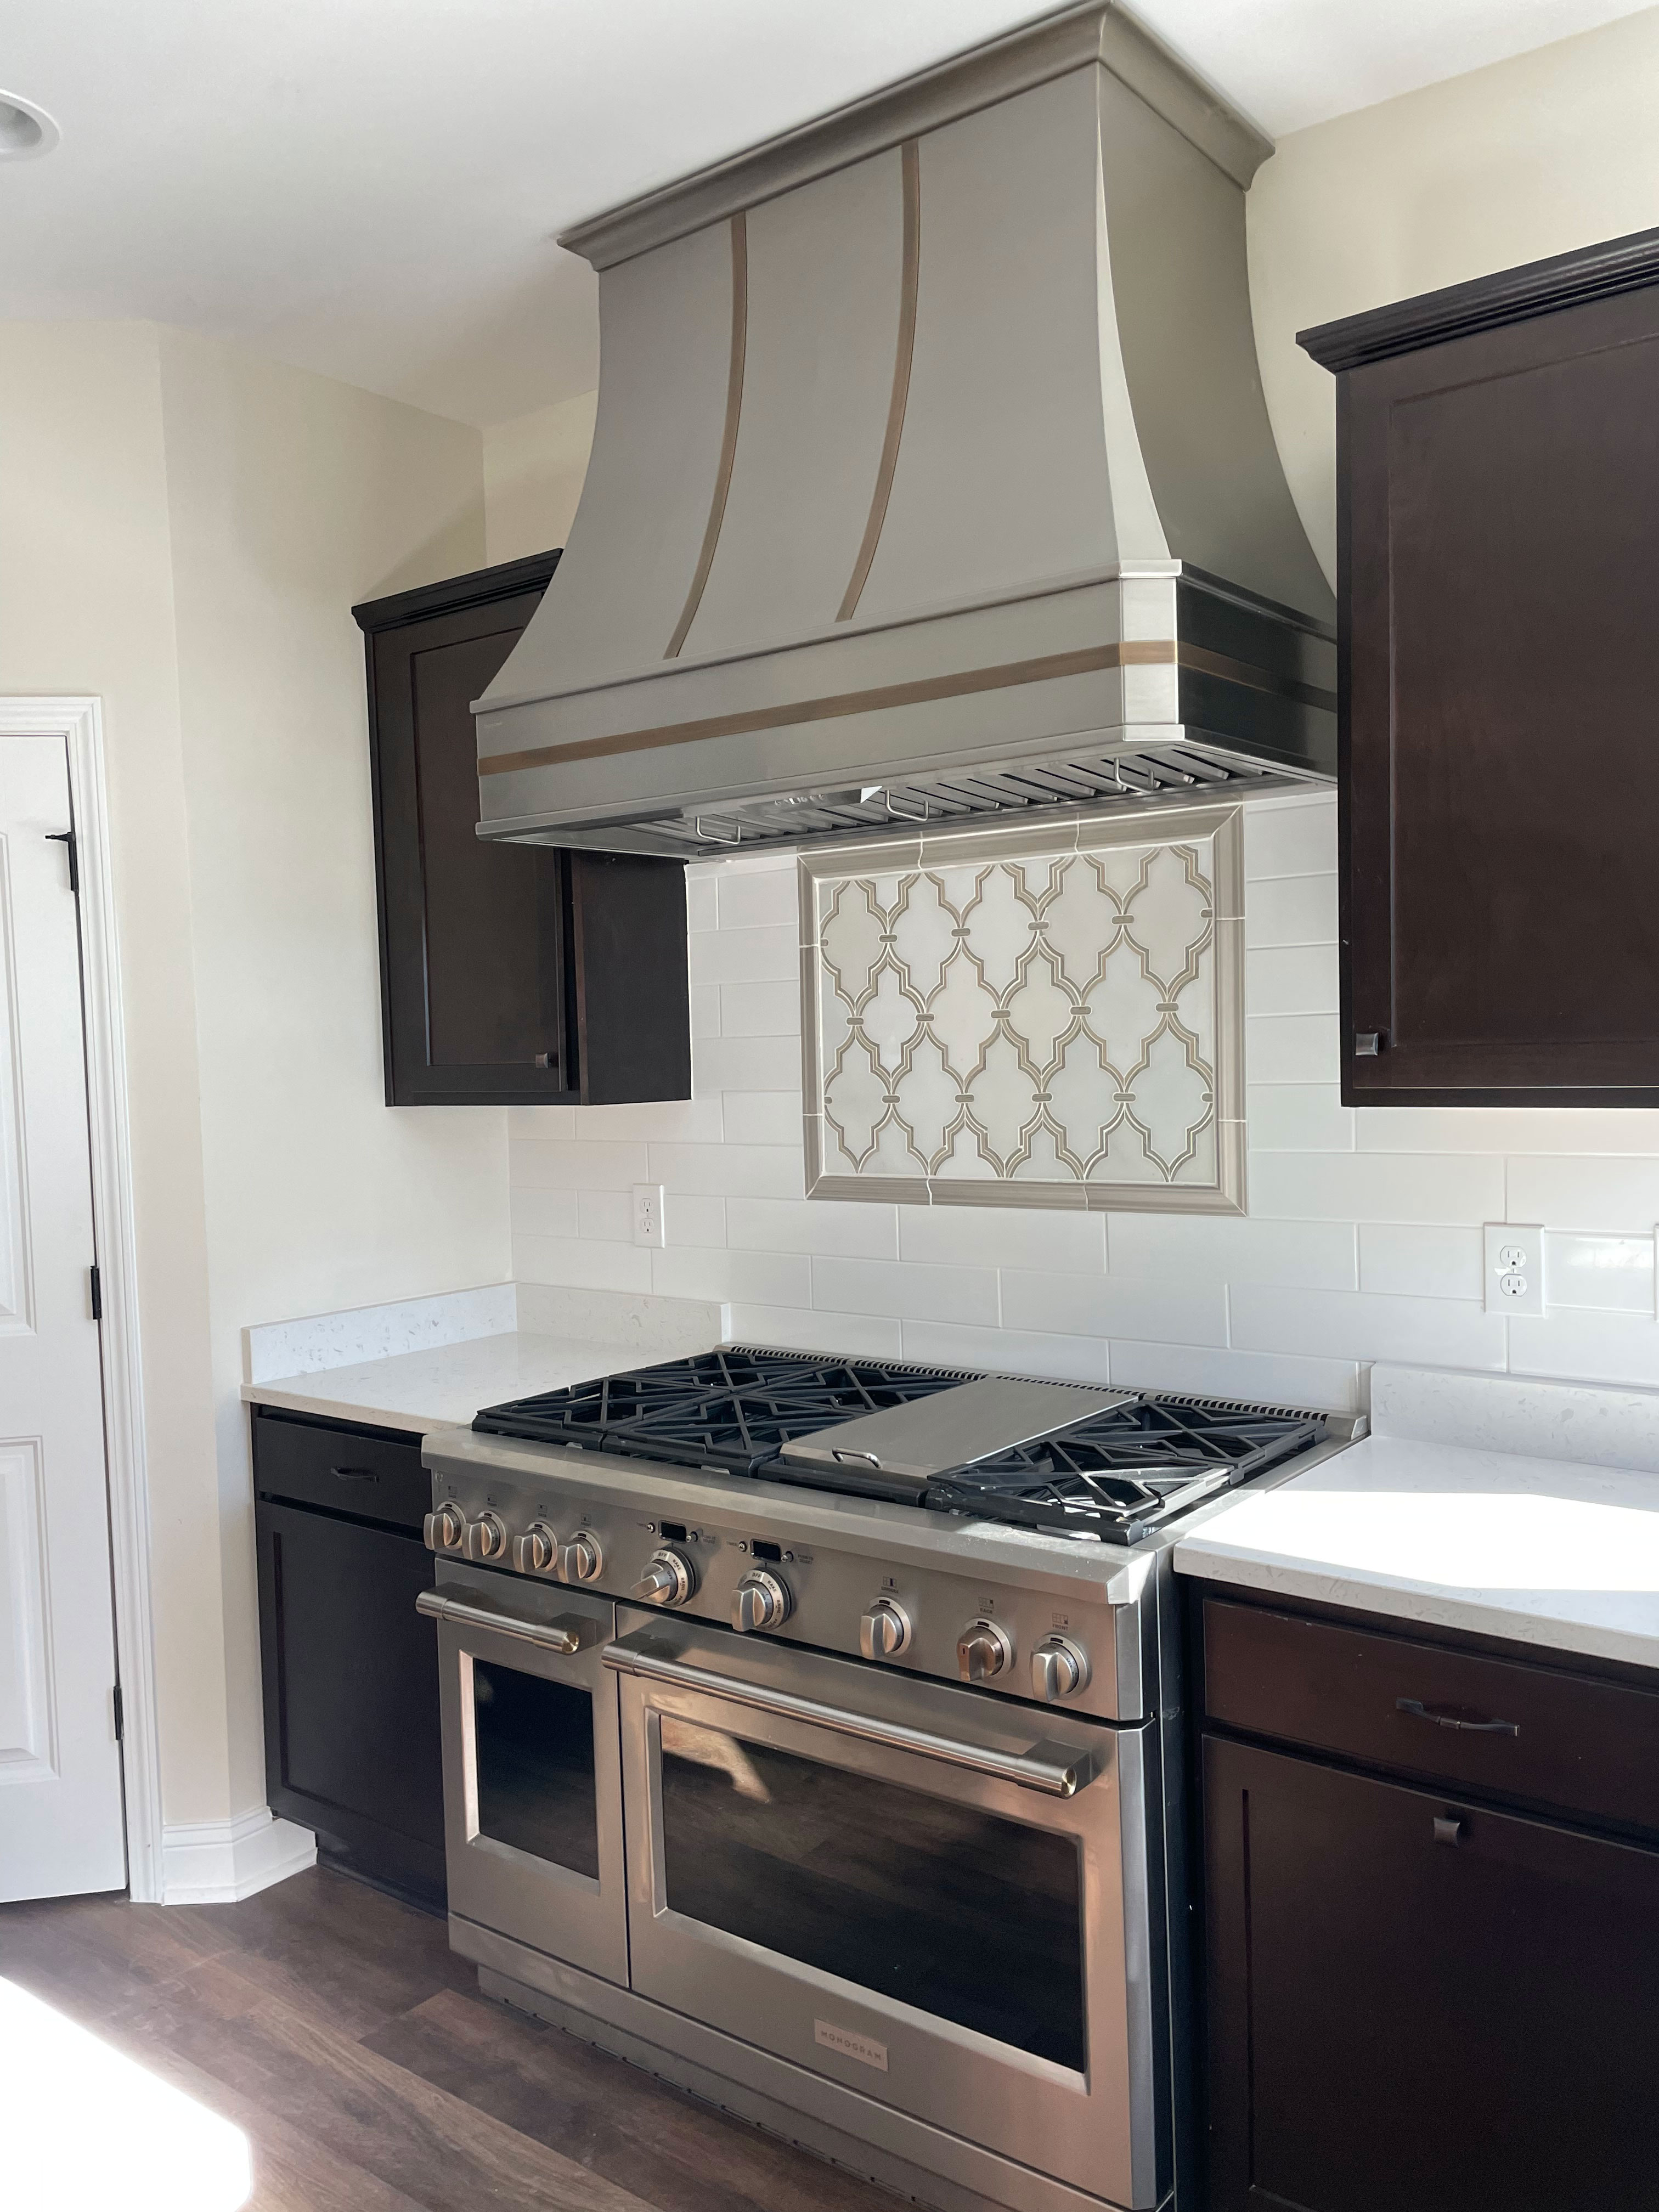 Stunning french kitchen design innovative range hood featuring brown kitchen cabinets marble backsplash